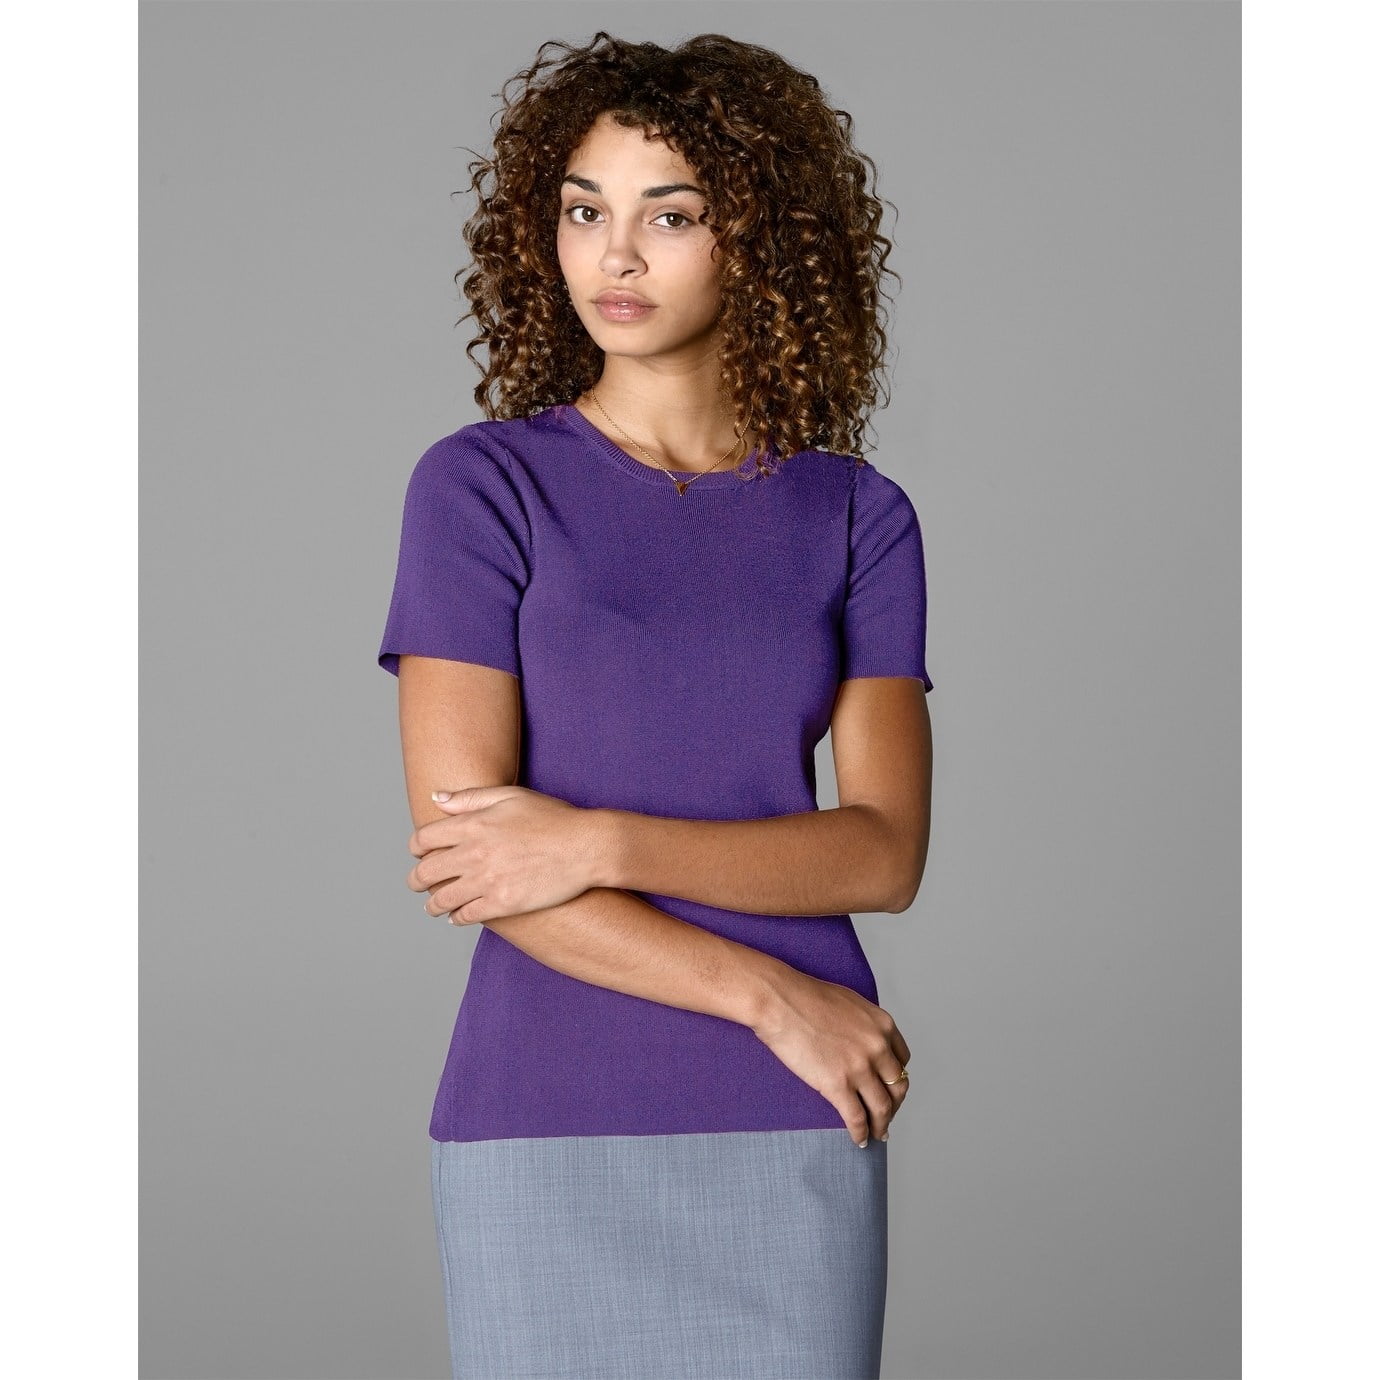 Twin Hill - Twin Hill Womens Sweater Purple Rayon/Nylon